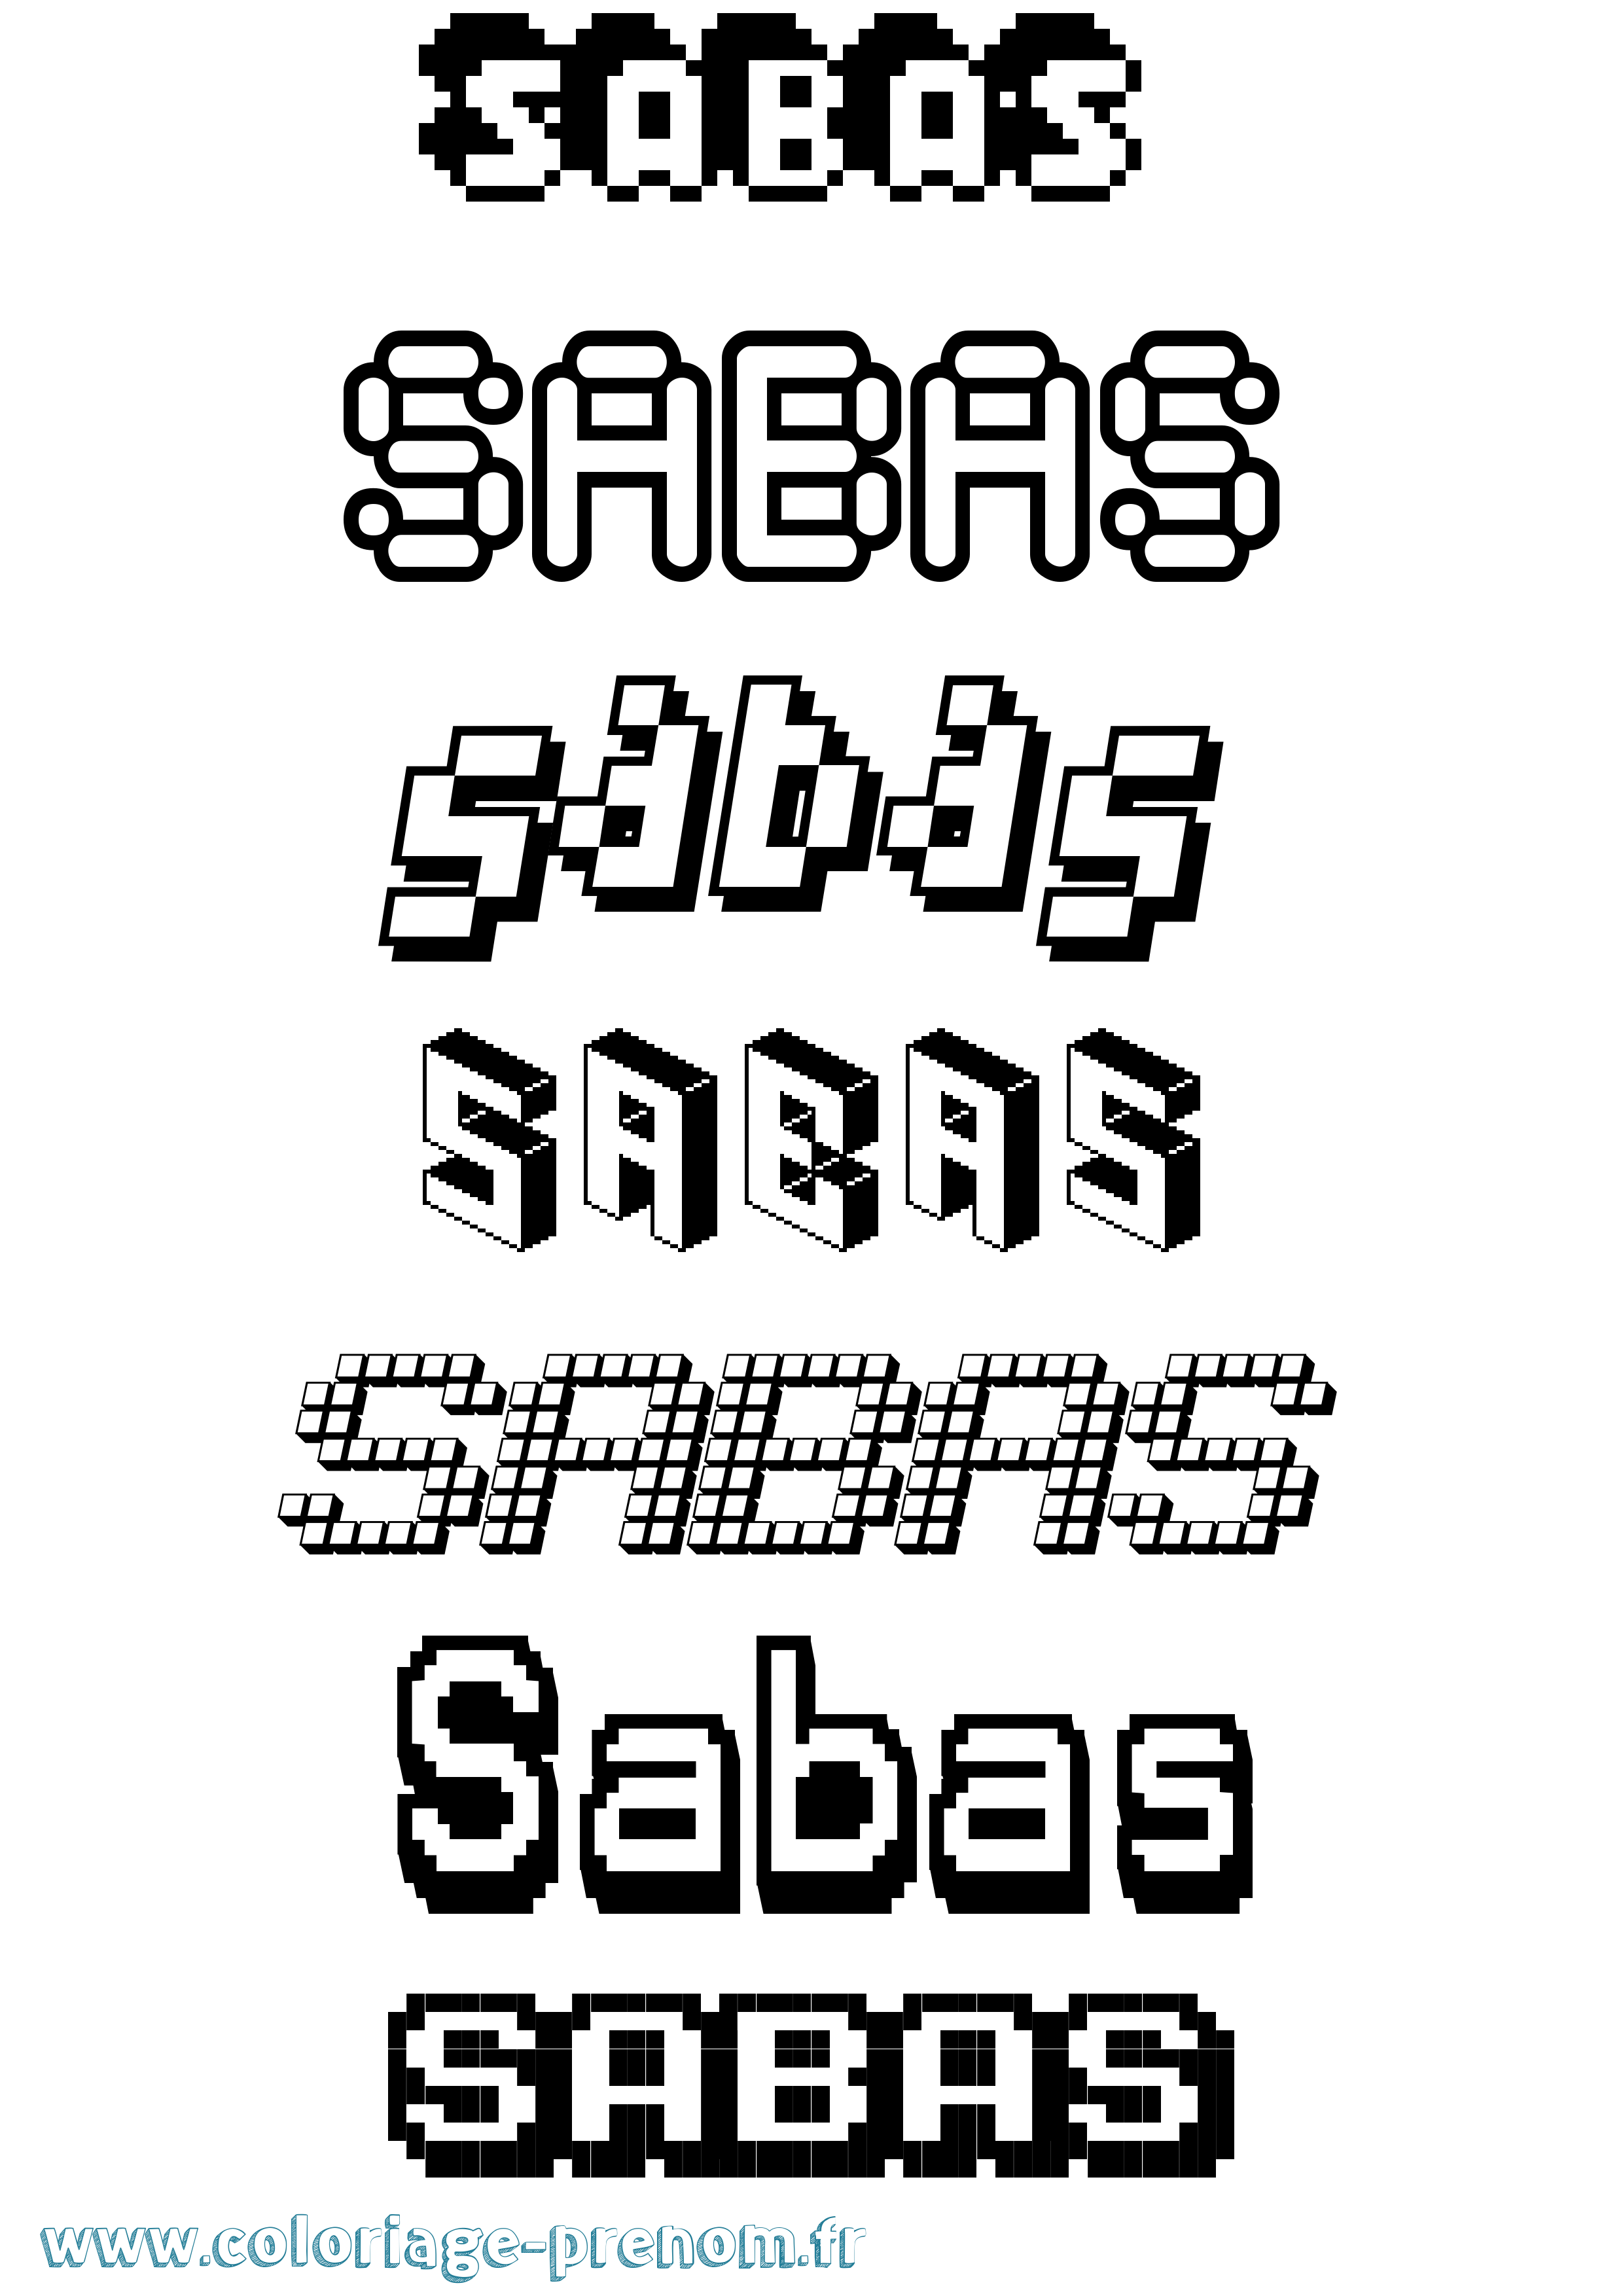 Coloriage prénom Sabas Pixel